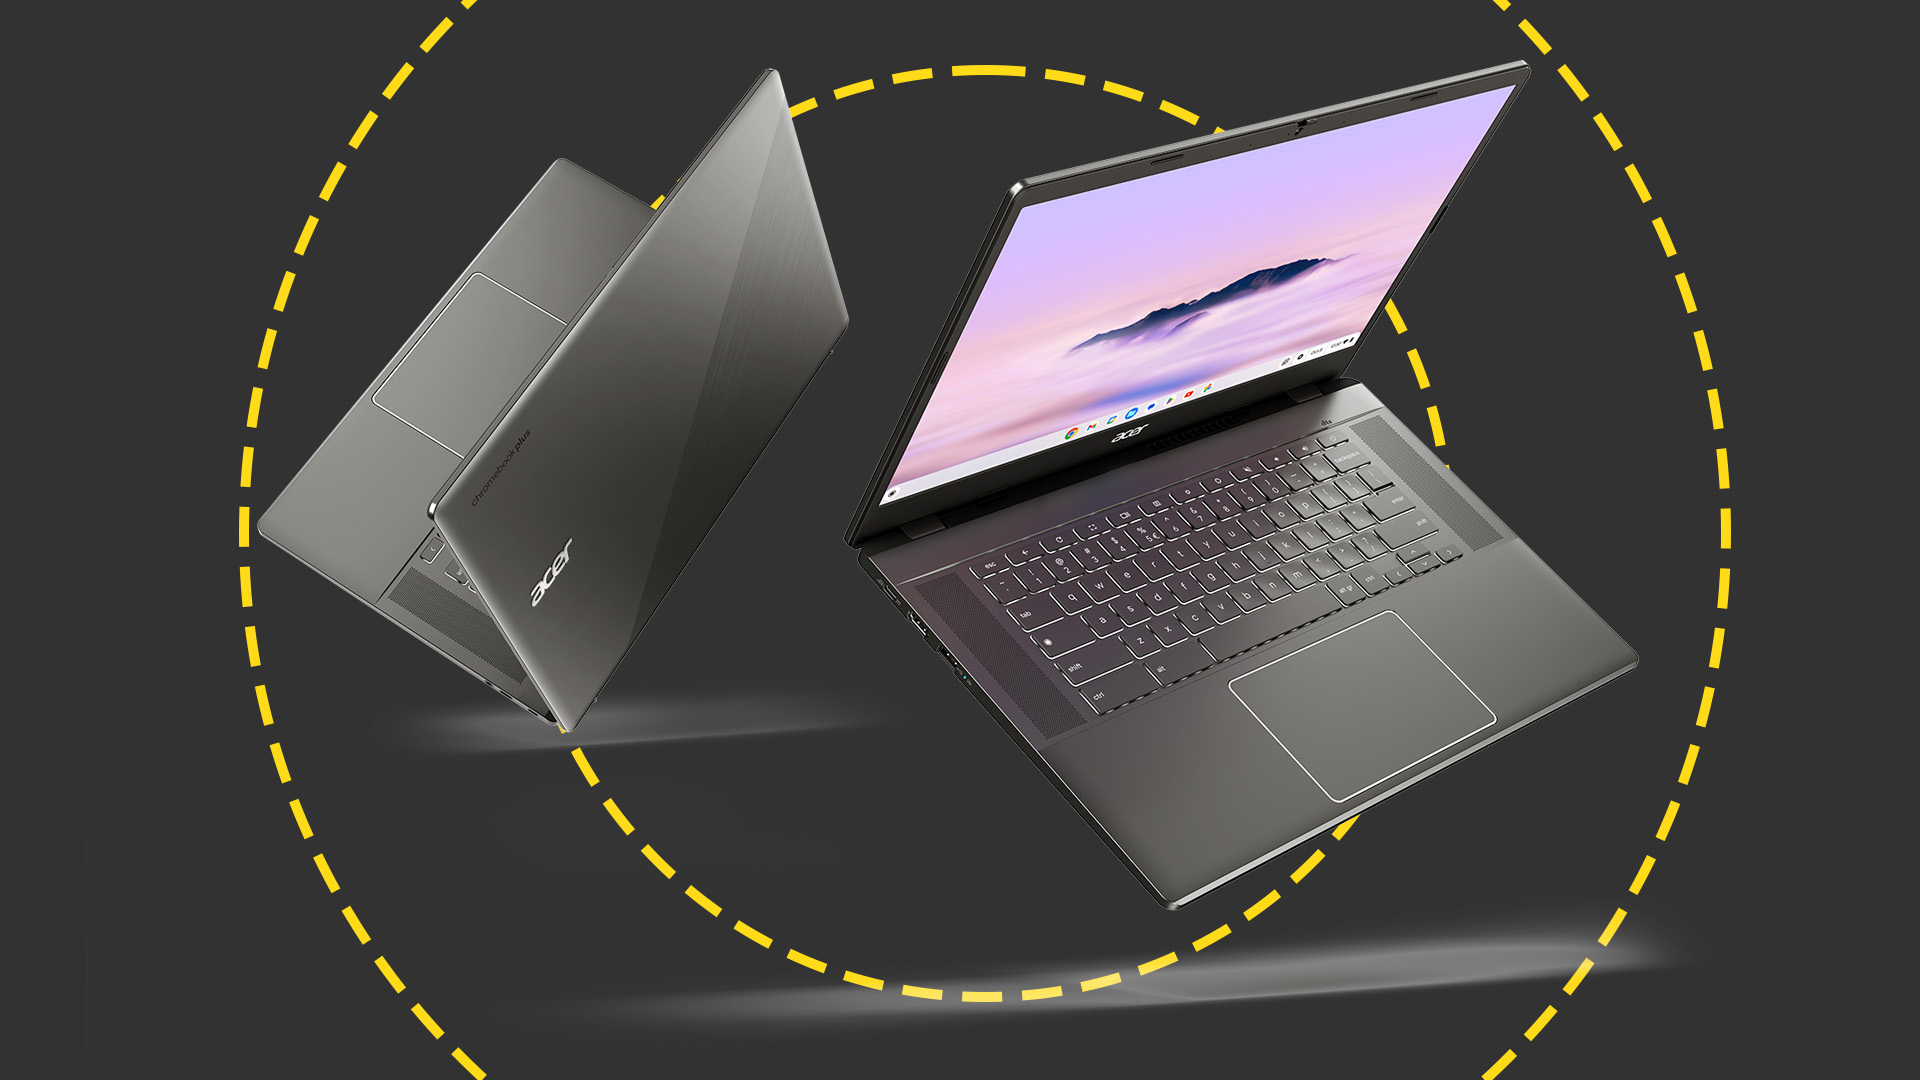 Acer Chromebook 15 (2016) Review: A step back from the original